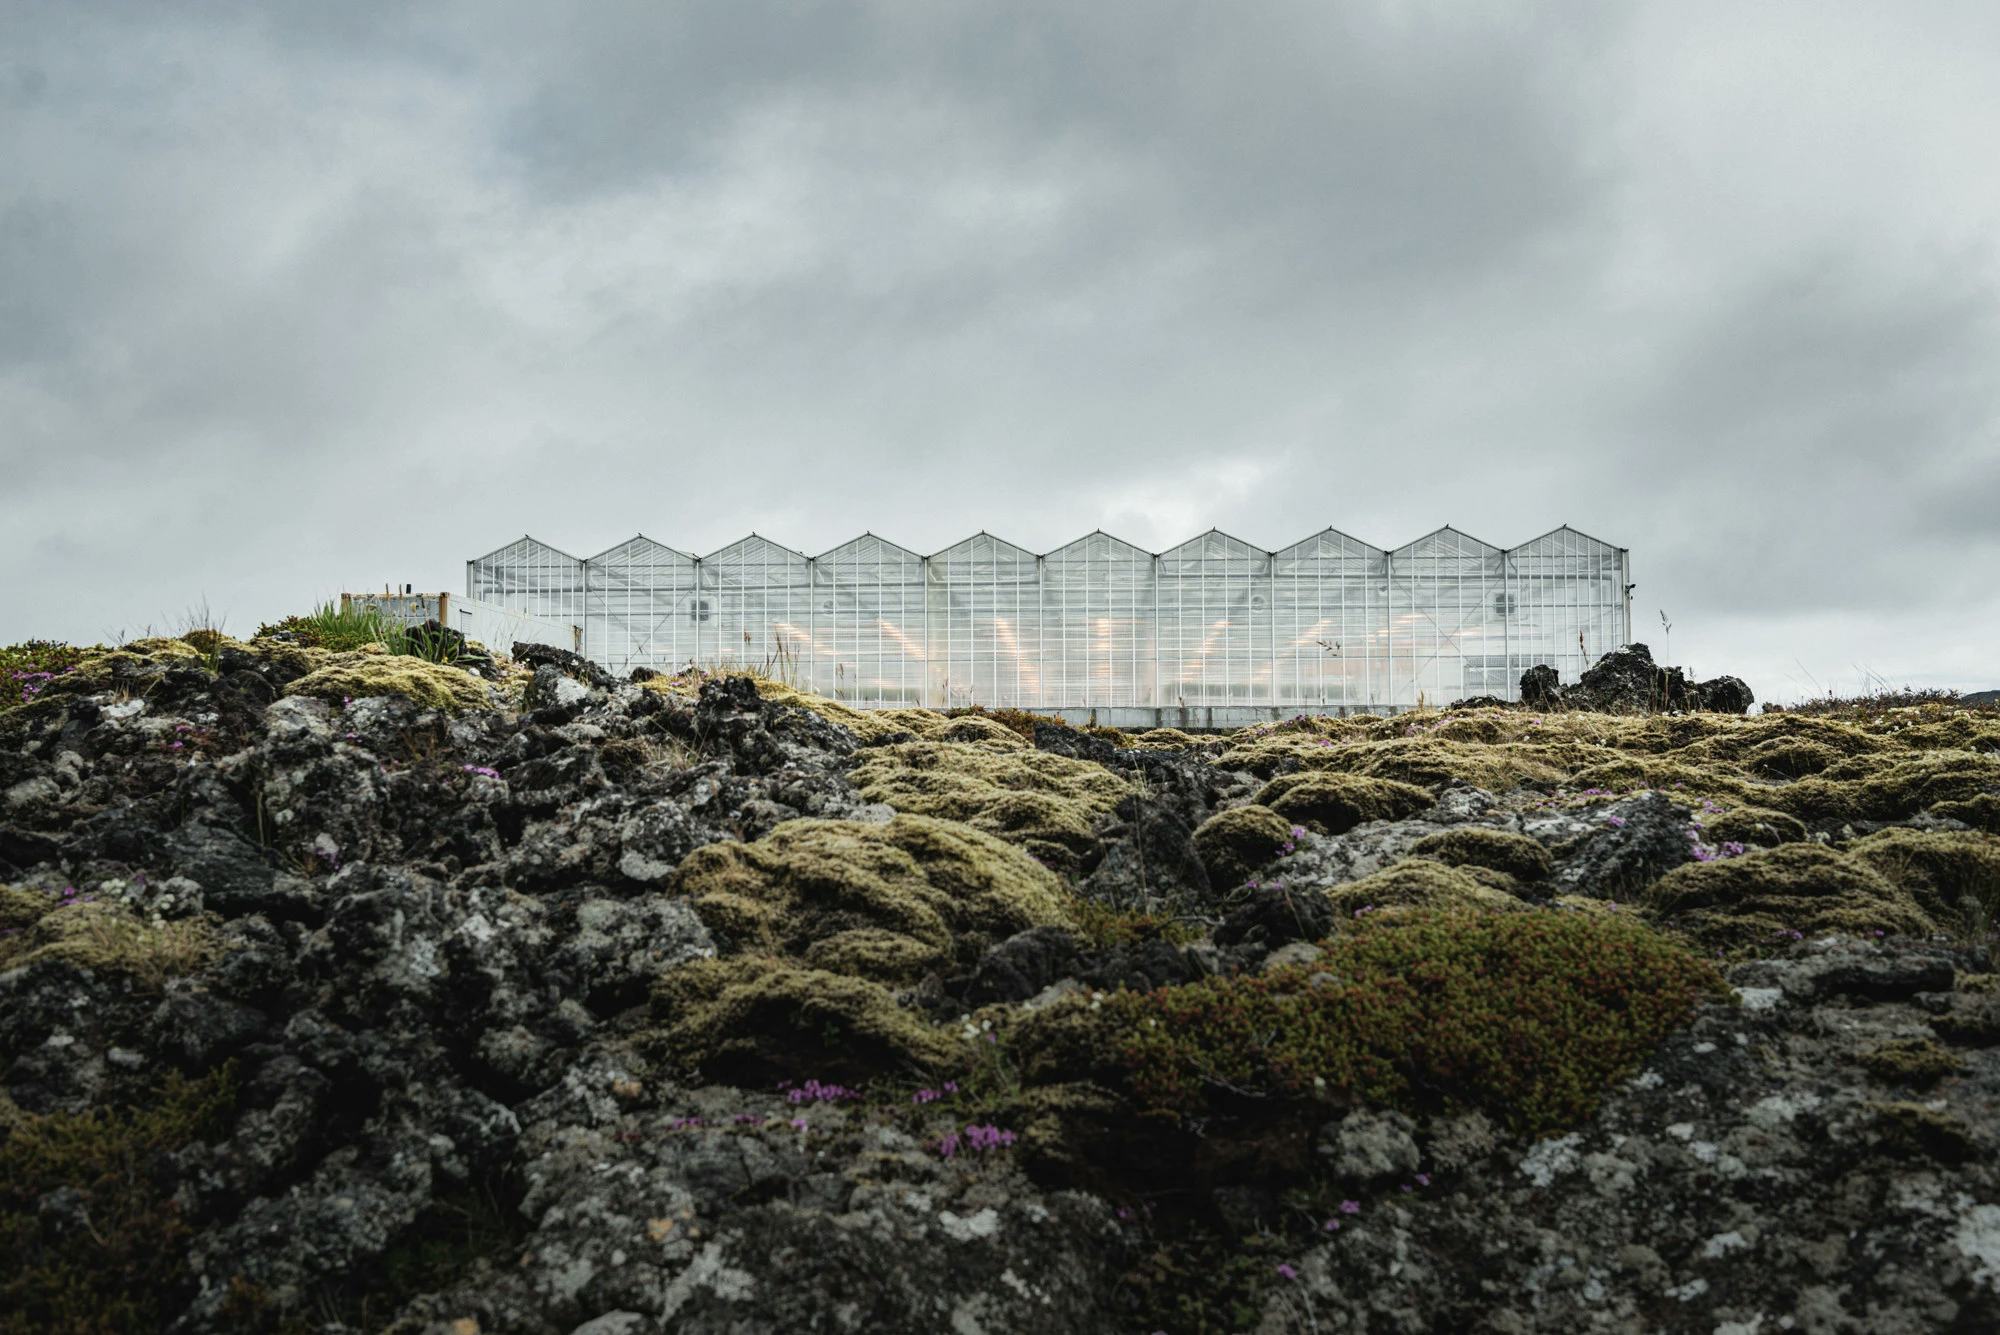 Iceland's innovations to reach net-zero